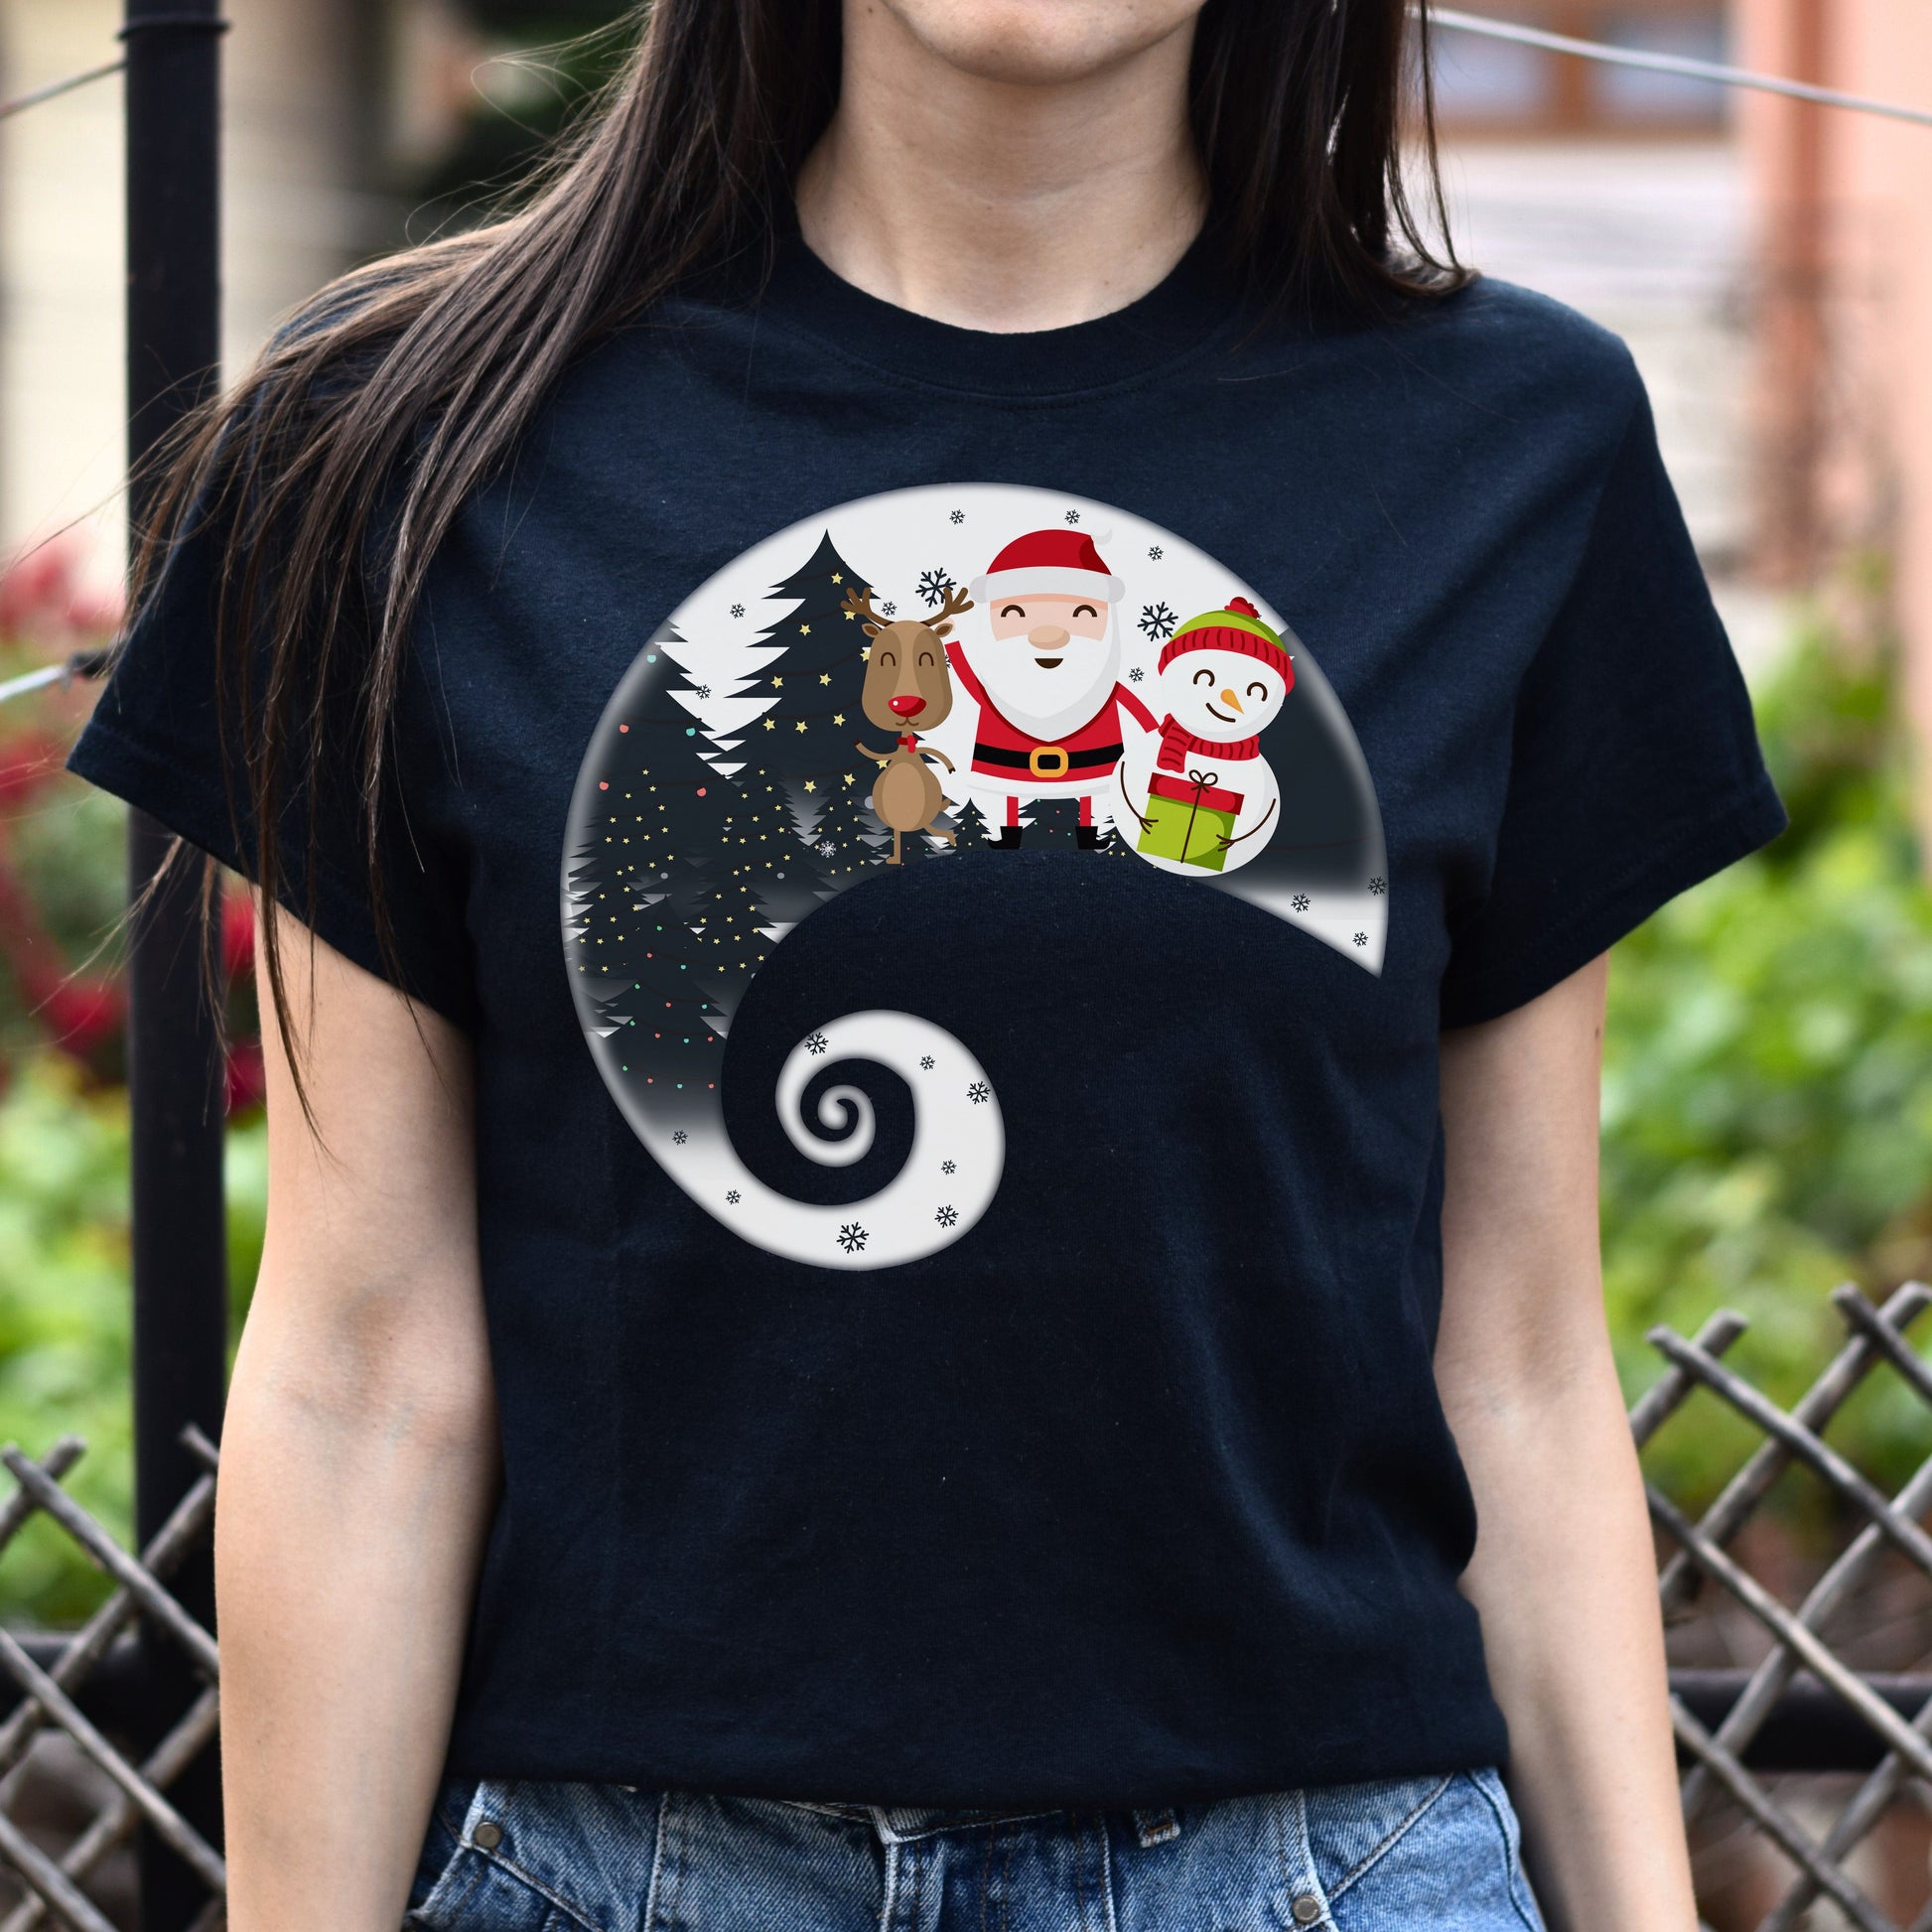 Cute Christmas Unisex shirt winter Holiday tee Black Dark Heather-Family-Gift-Planet